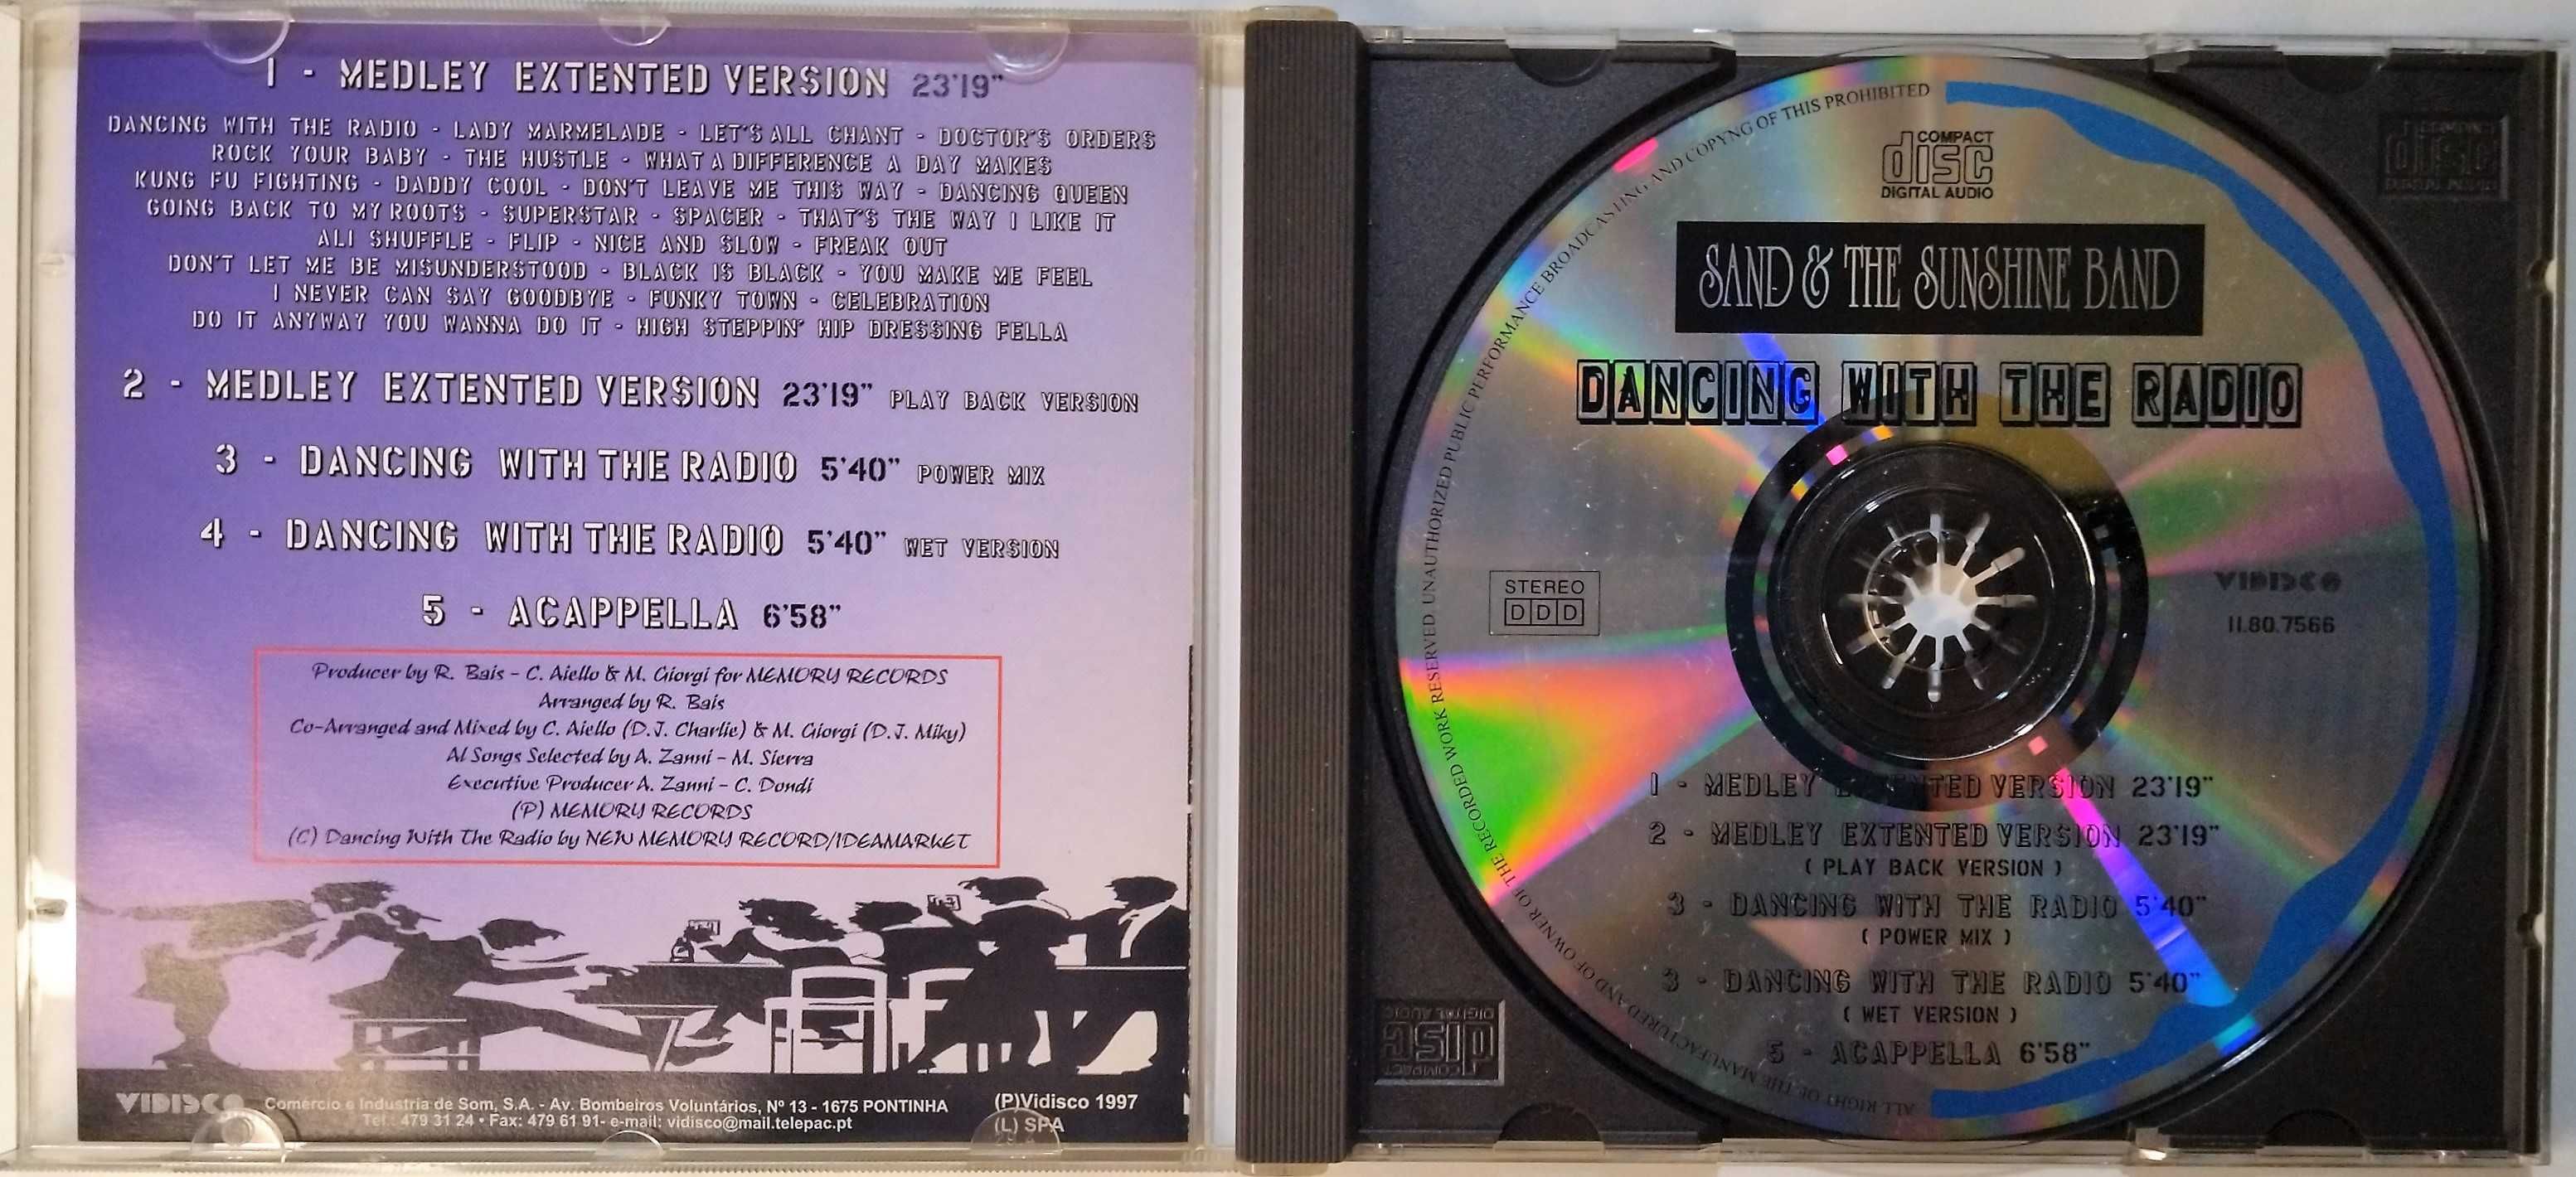 Sand the Sunshine Band - Dancing with the radio | 1 CD